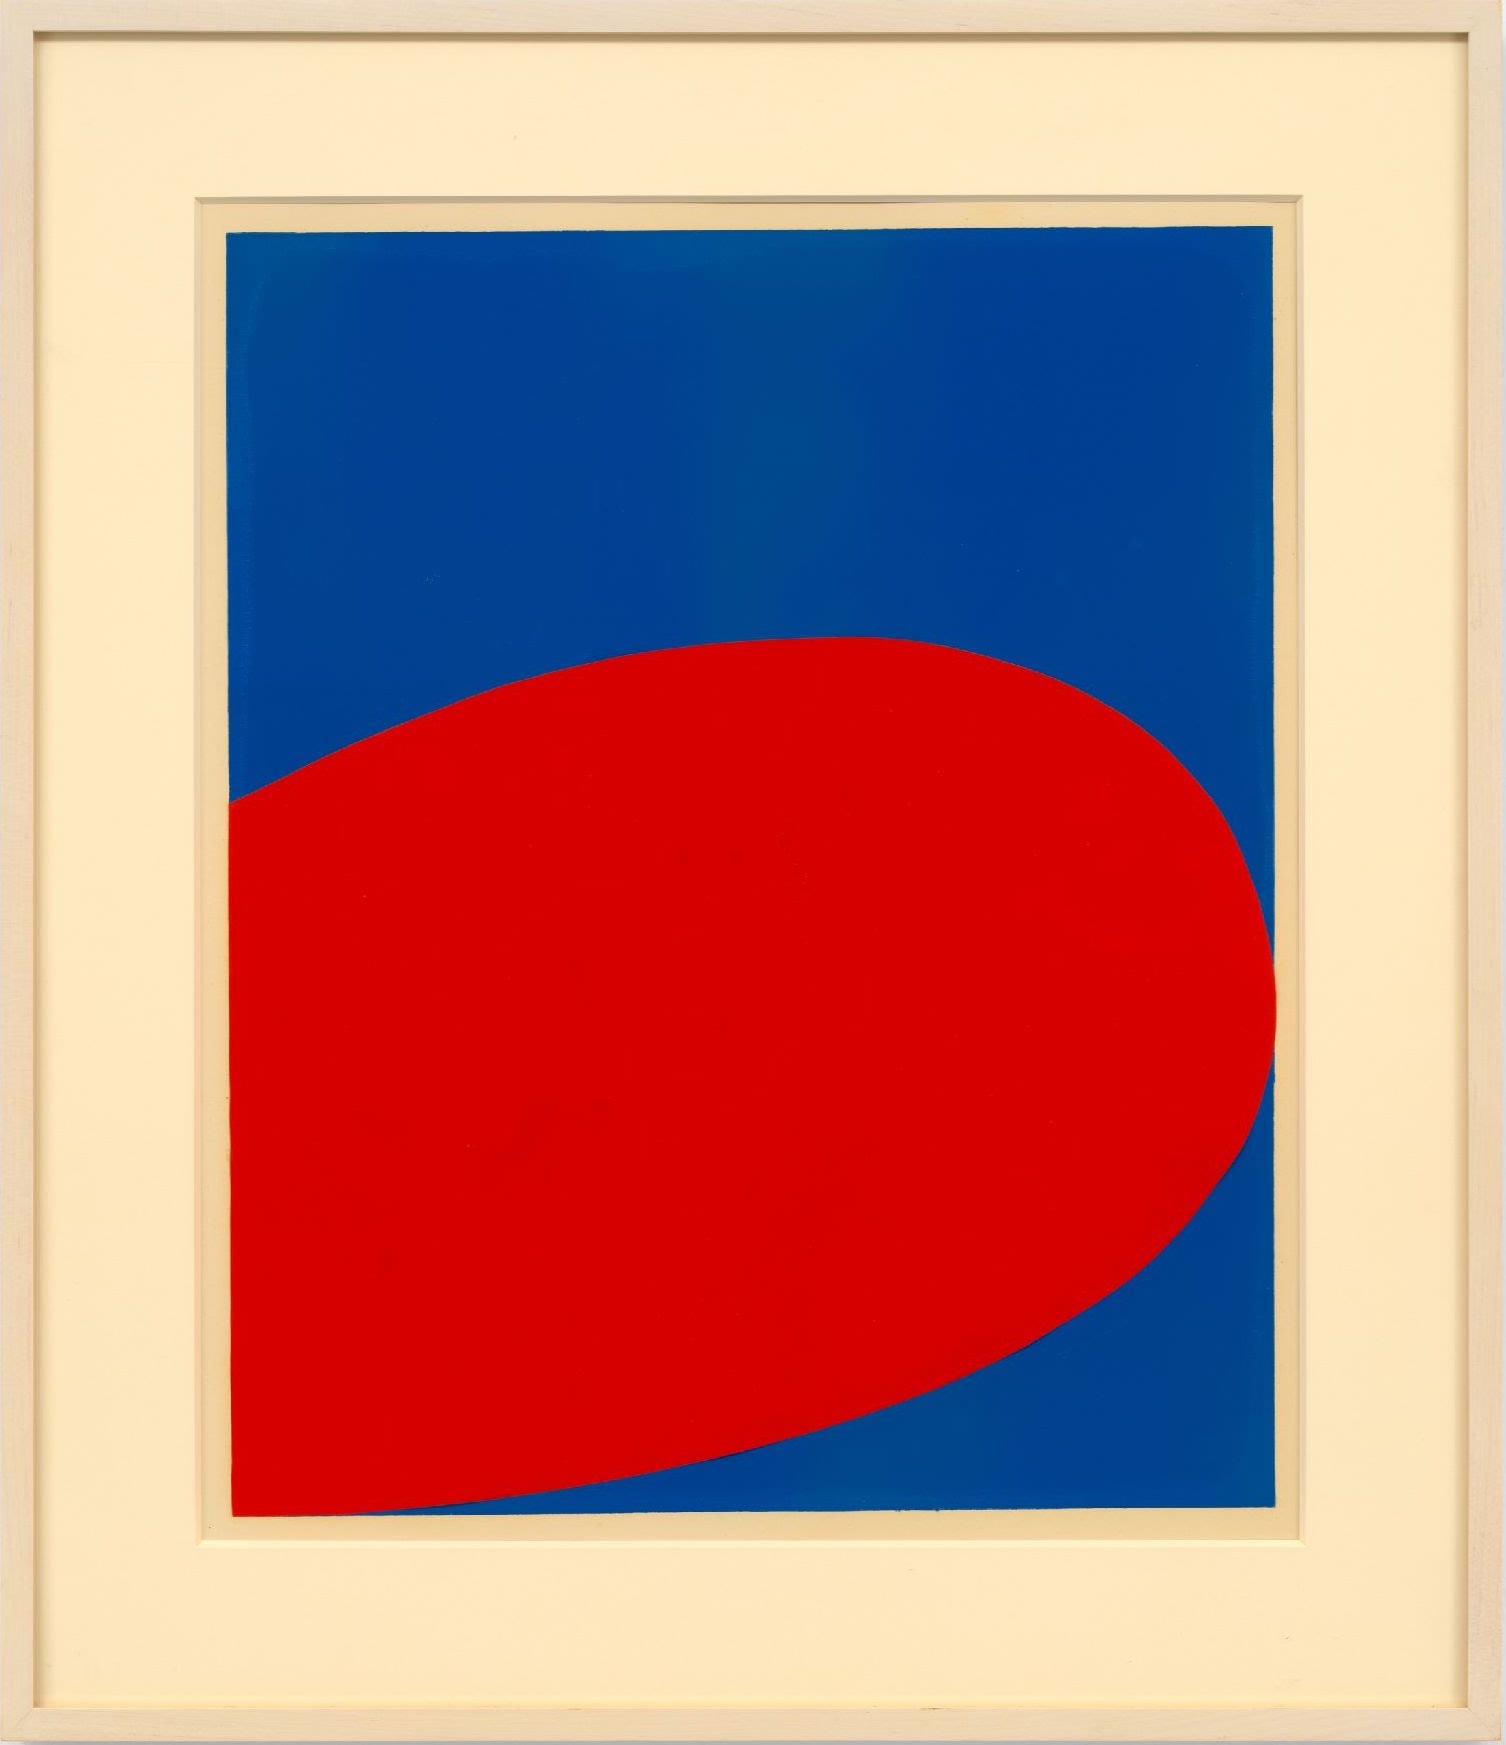 Ellsworth Kelly Untitled (Red/Blue), c. 1962-64